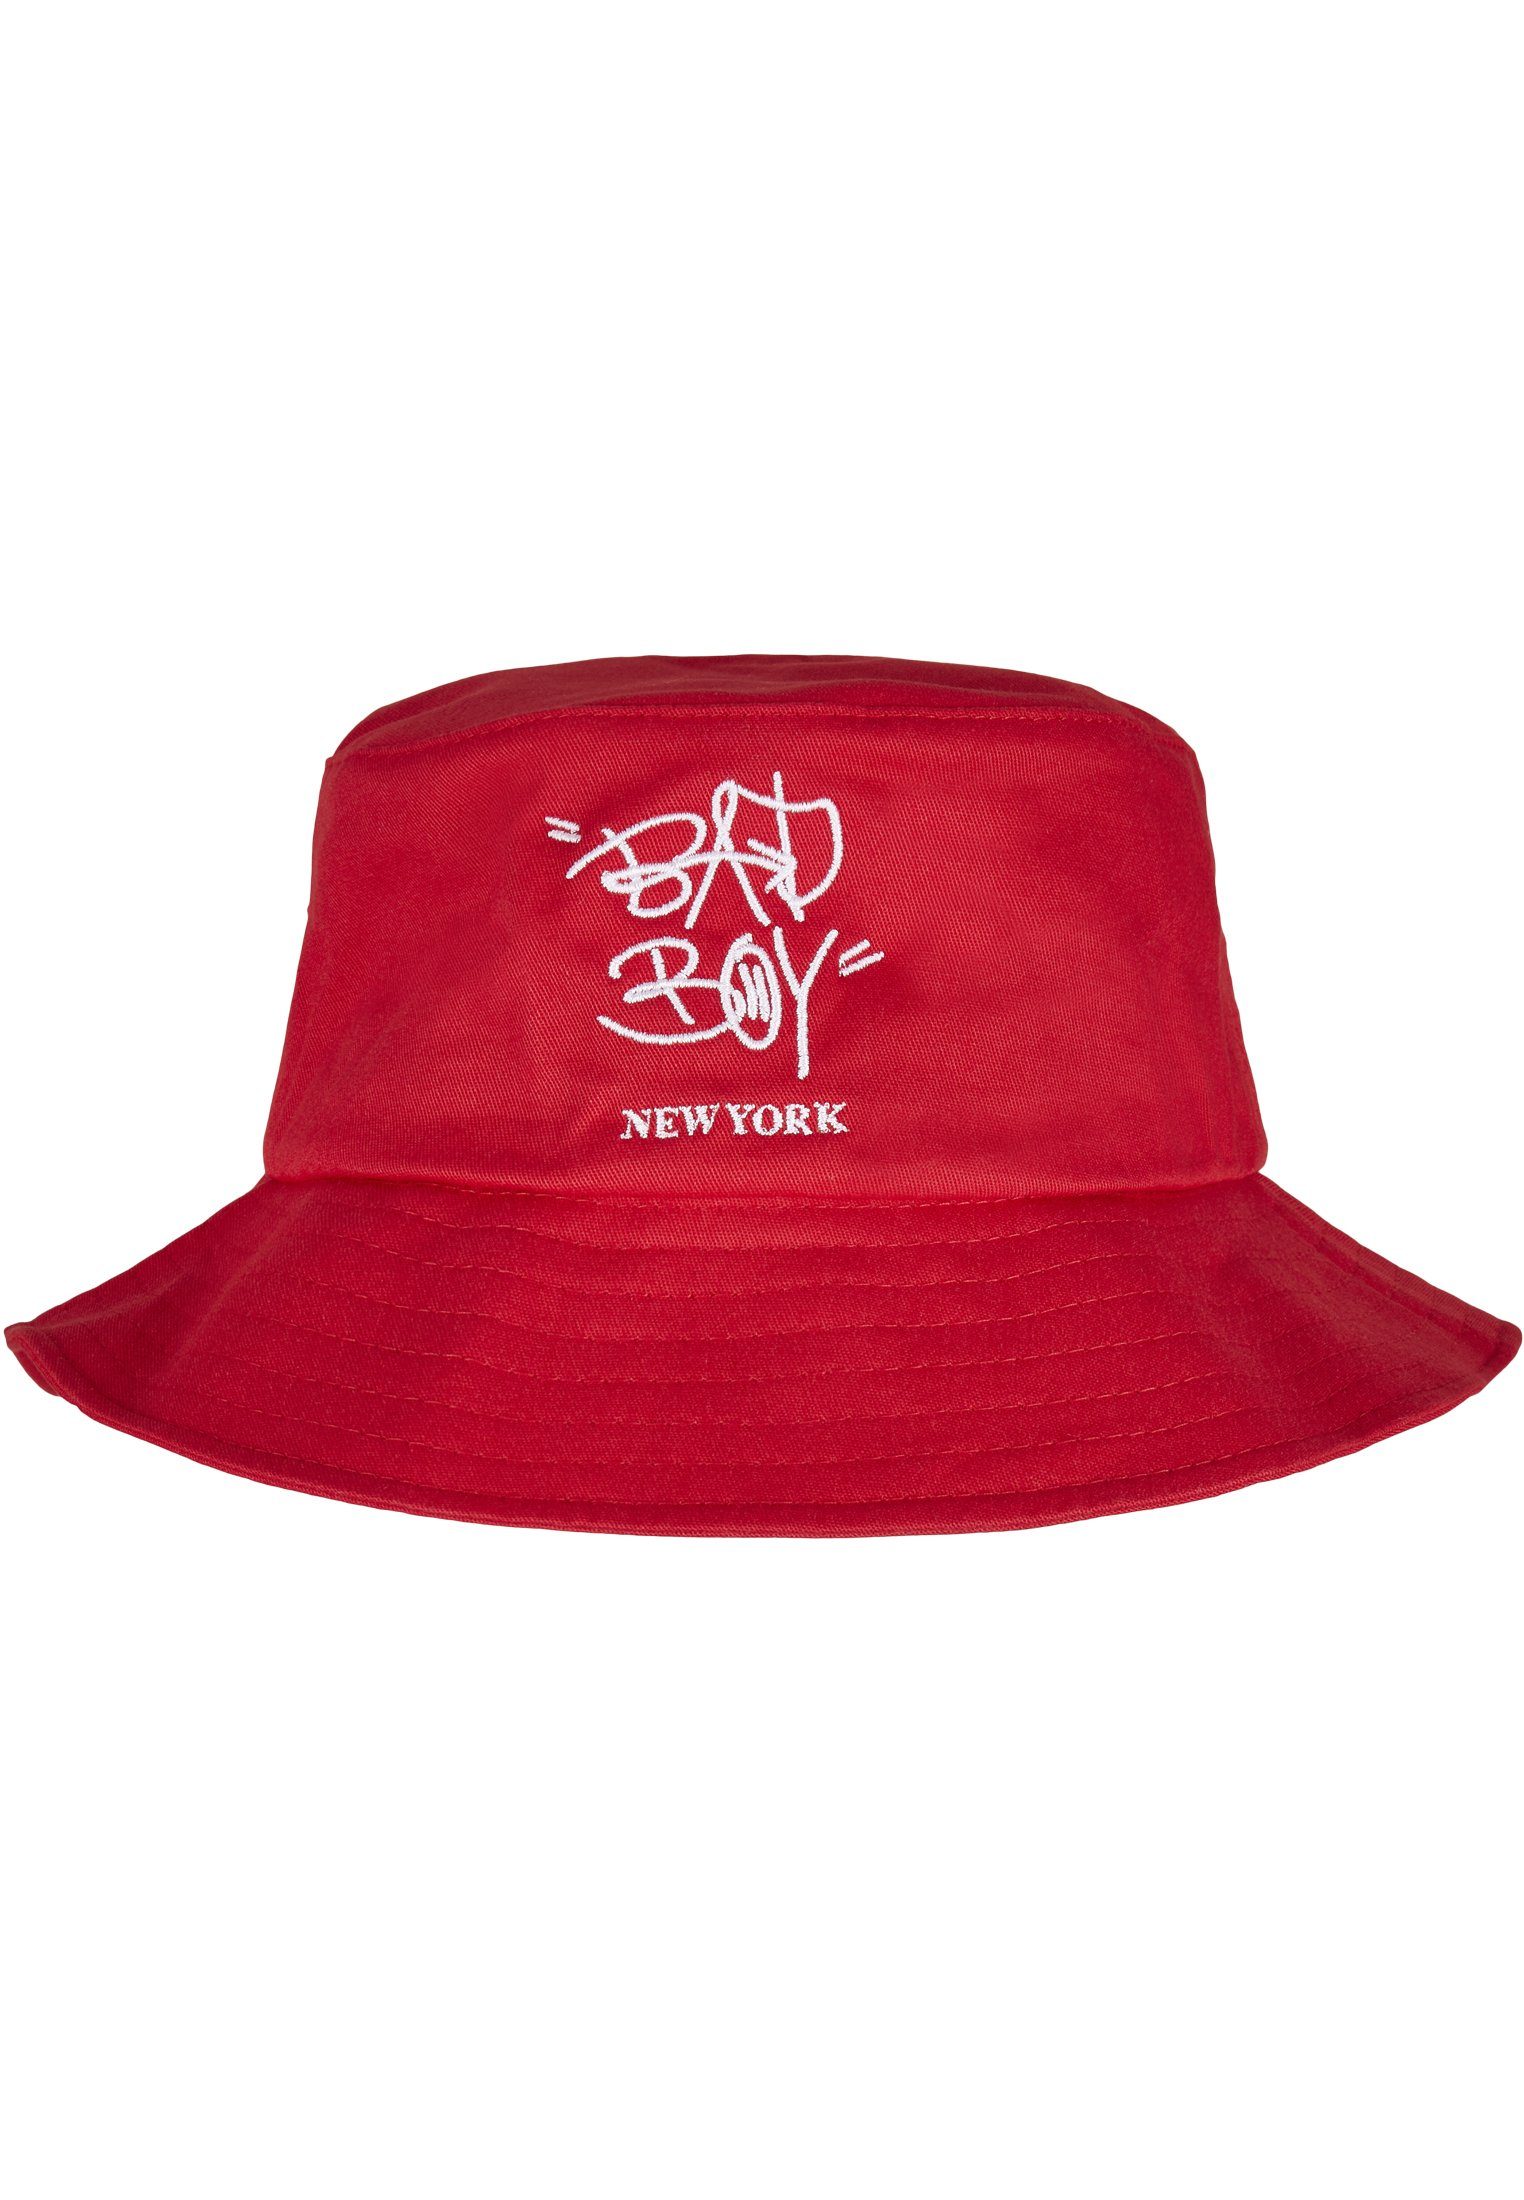 [Super günstiger Sonderpreis] MisterTee Snapback Cap Accessoires Bad Bucket Hat Boy